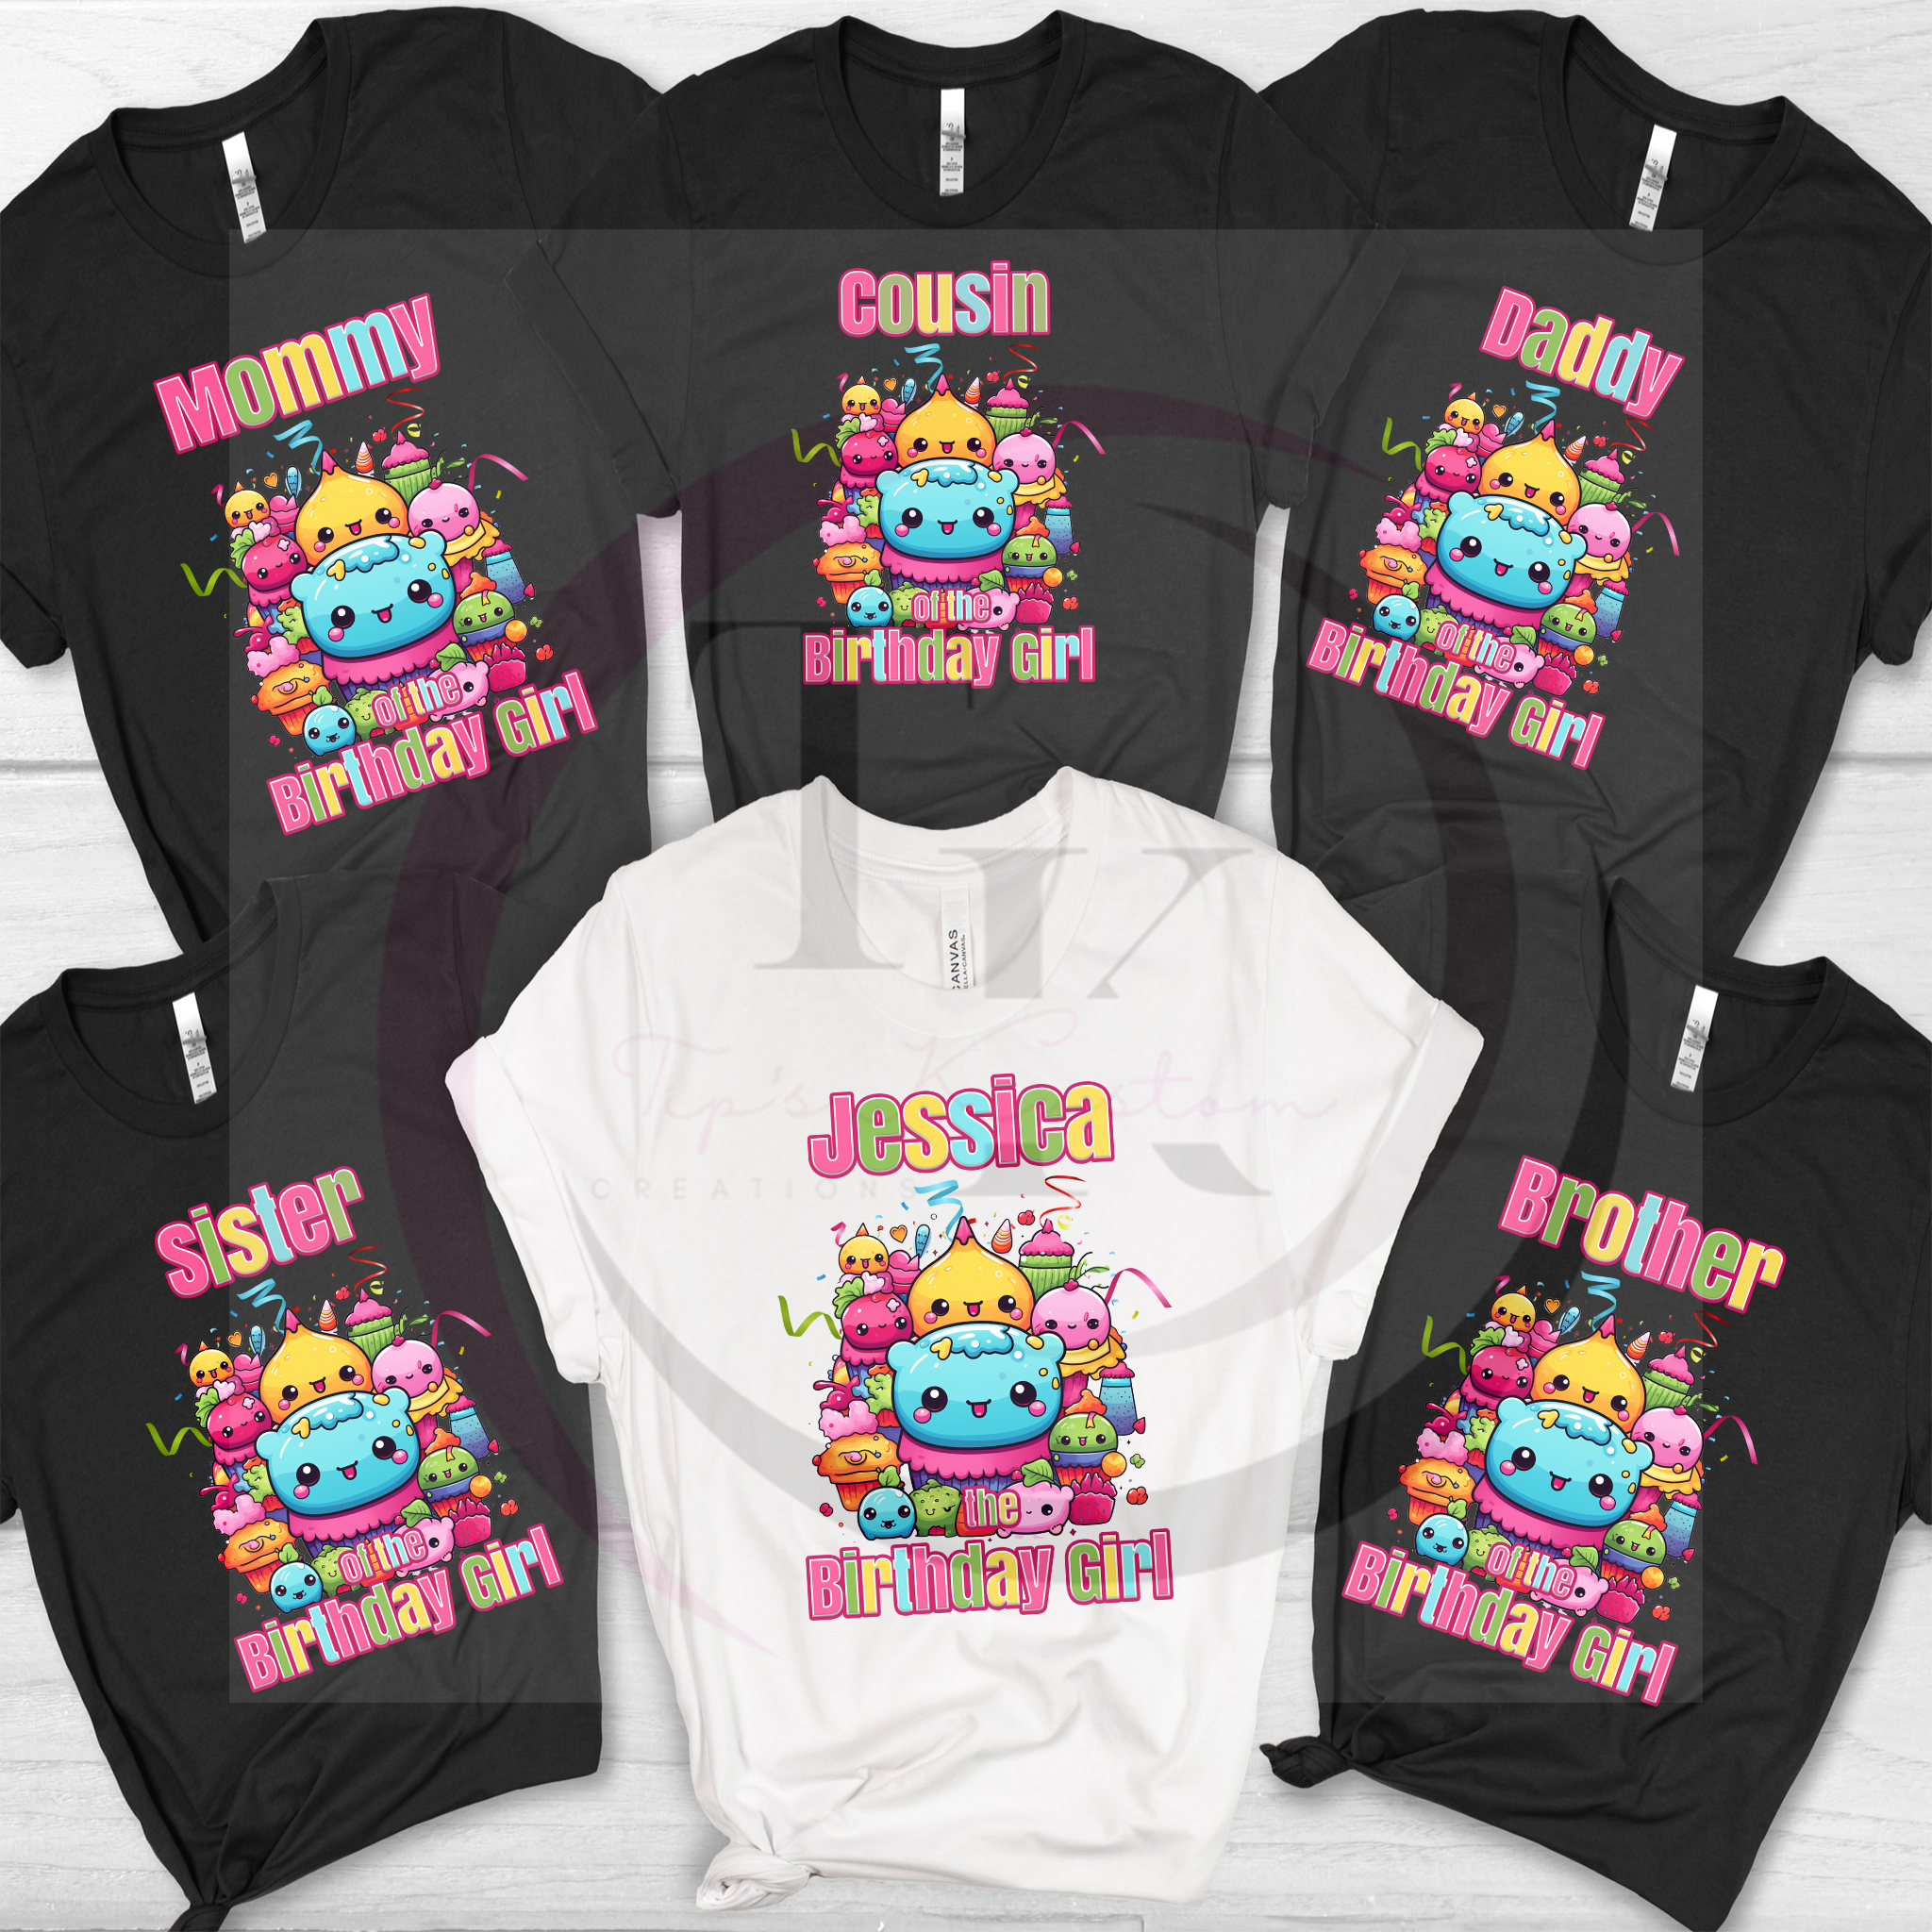 Kids Kawaii Cartoon Birthday Shirts - Unite in Adorable Style!